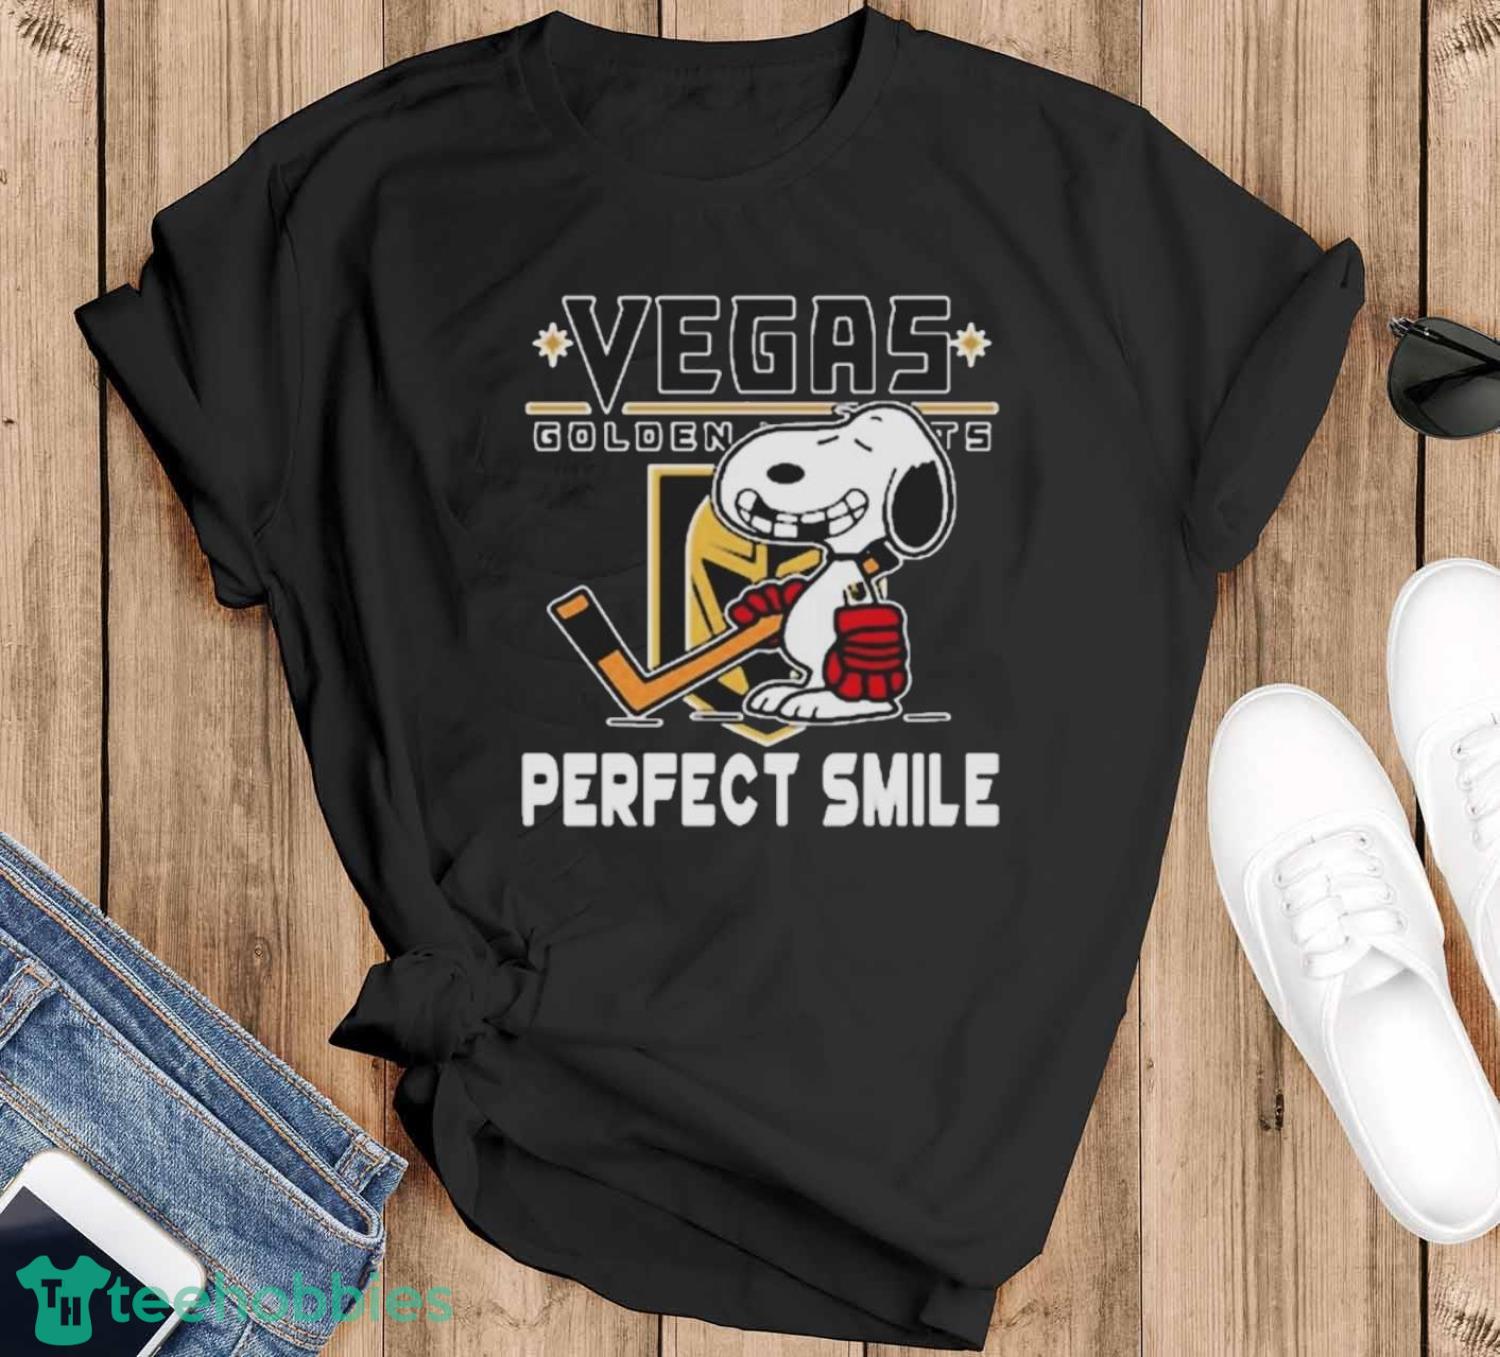 Nhl Vegas Golden Knights Snoopy Perfect Smile The Peanuts Movie Hockey Shirt - Black T-Shirt